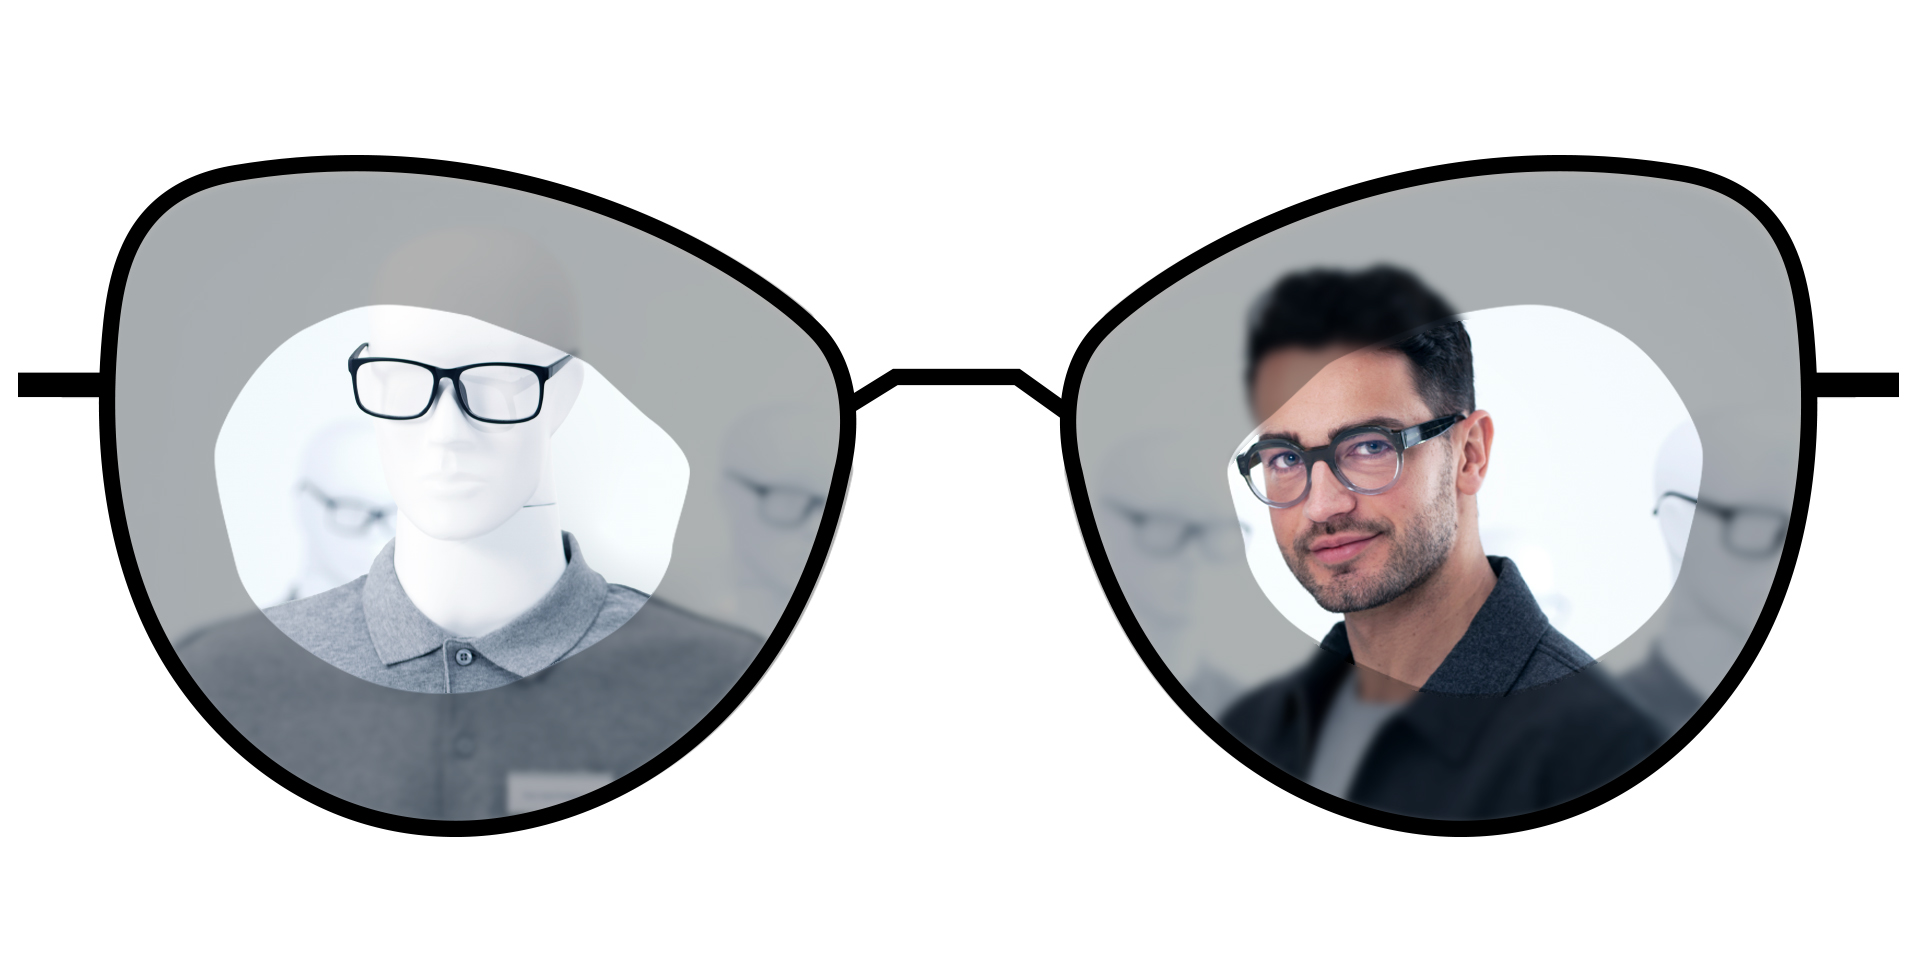 Glasses illustration showing the blurry zones of standard single vision lenses in comparison to the large clear zones of ZEISS Single Vision ClearView lenses.